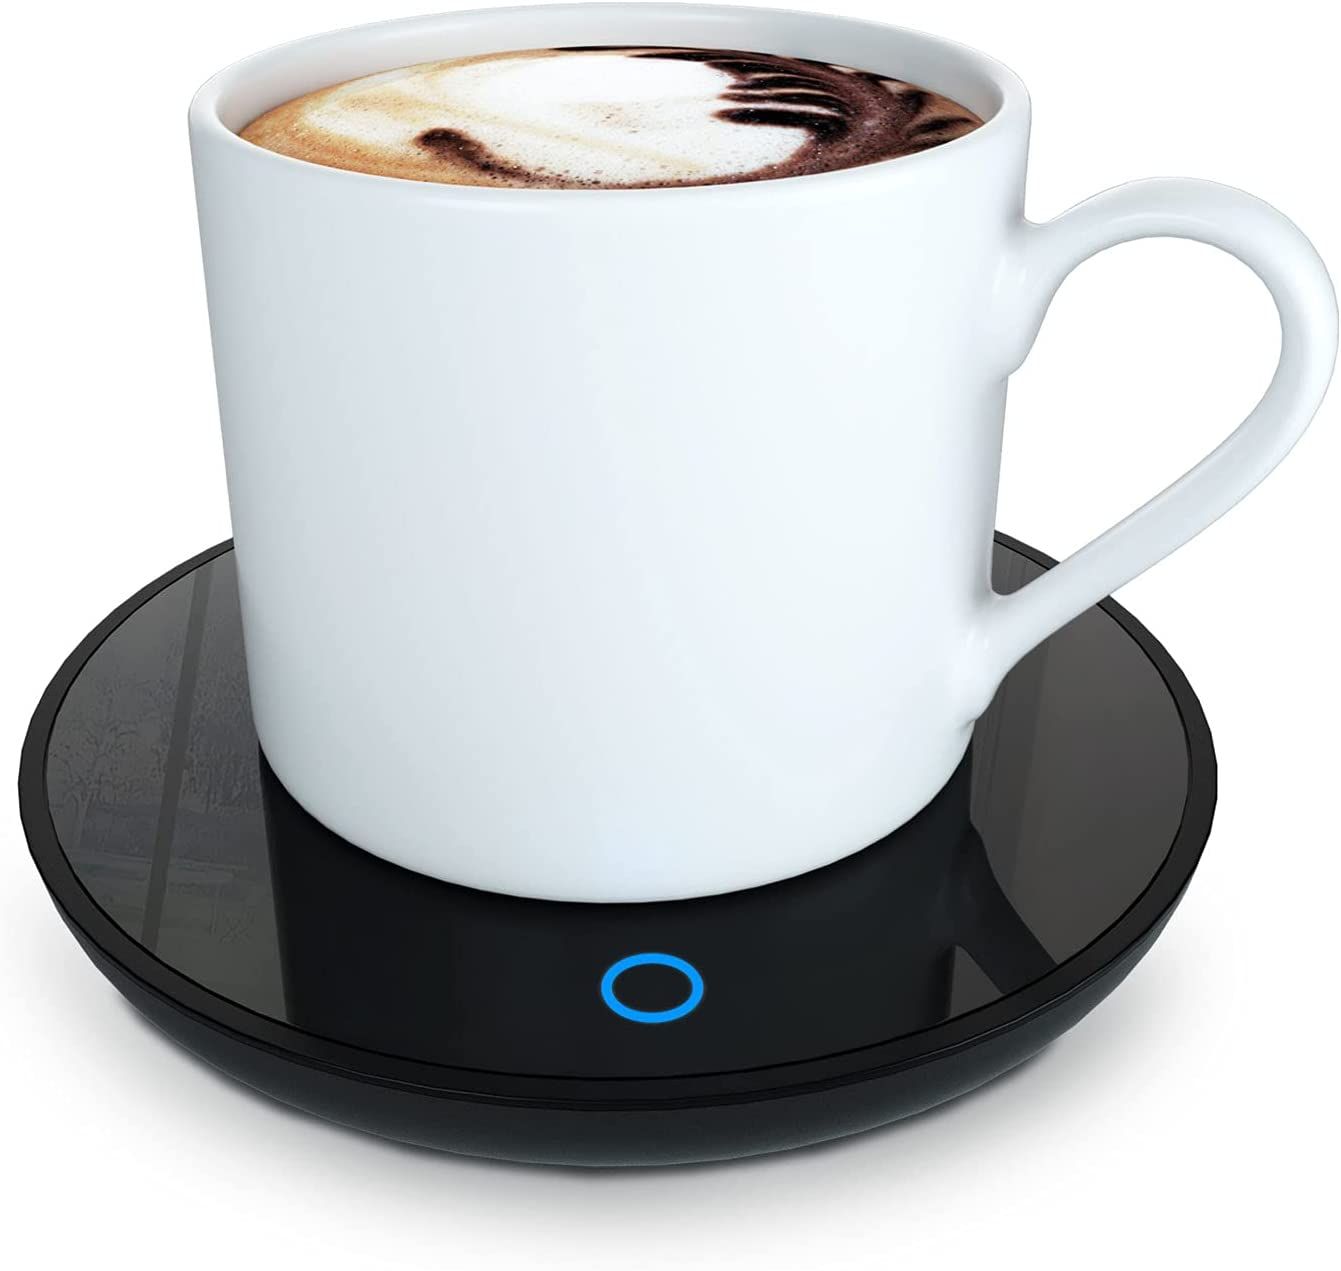 white coffee mug sitting on a black electric warmer